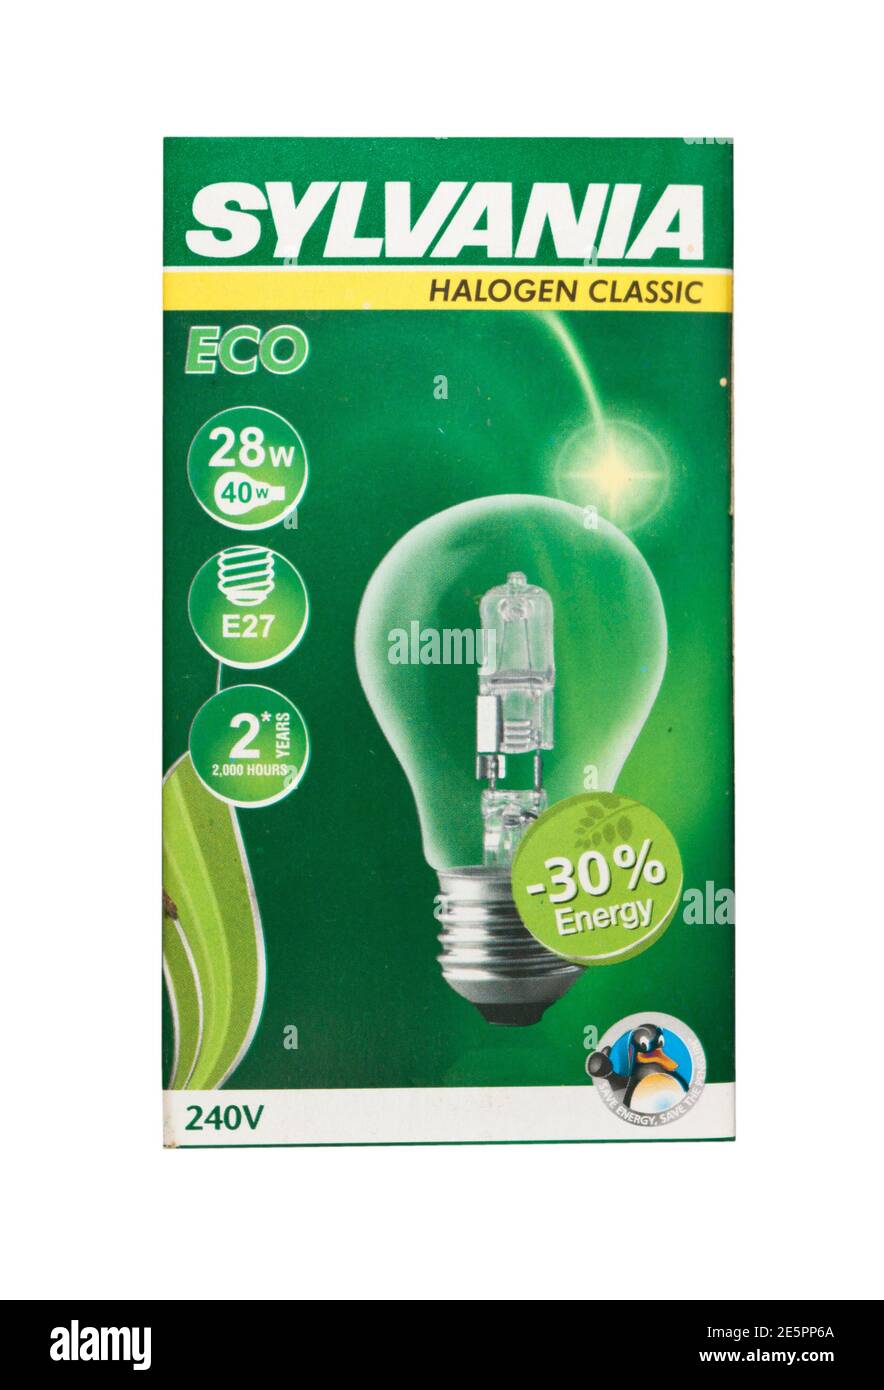 Sylvania Halogen Classic Eco Energiesparlampen Stockfoto